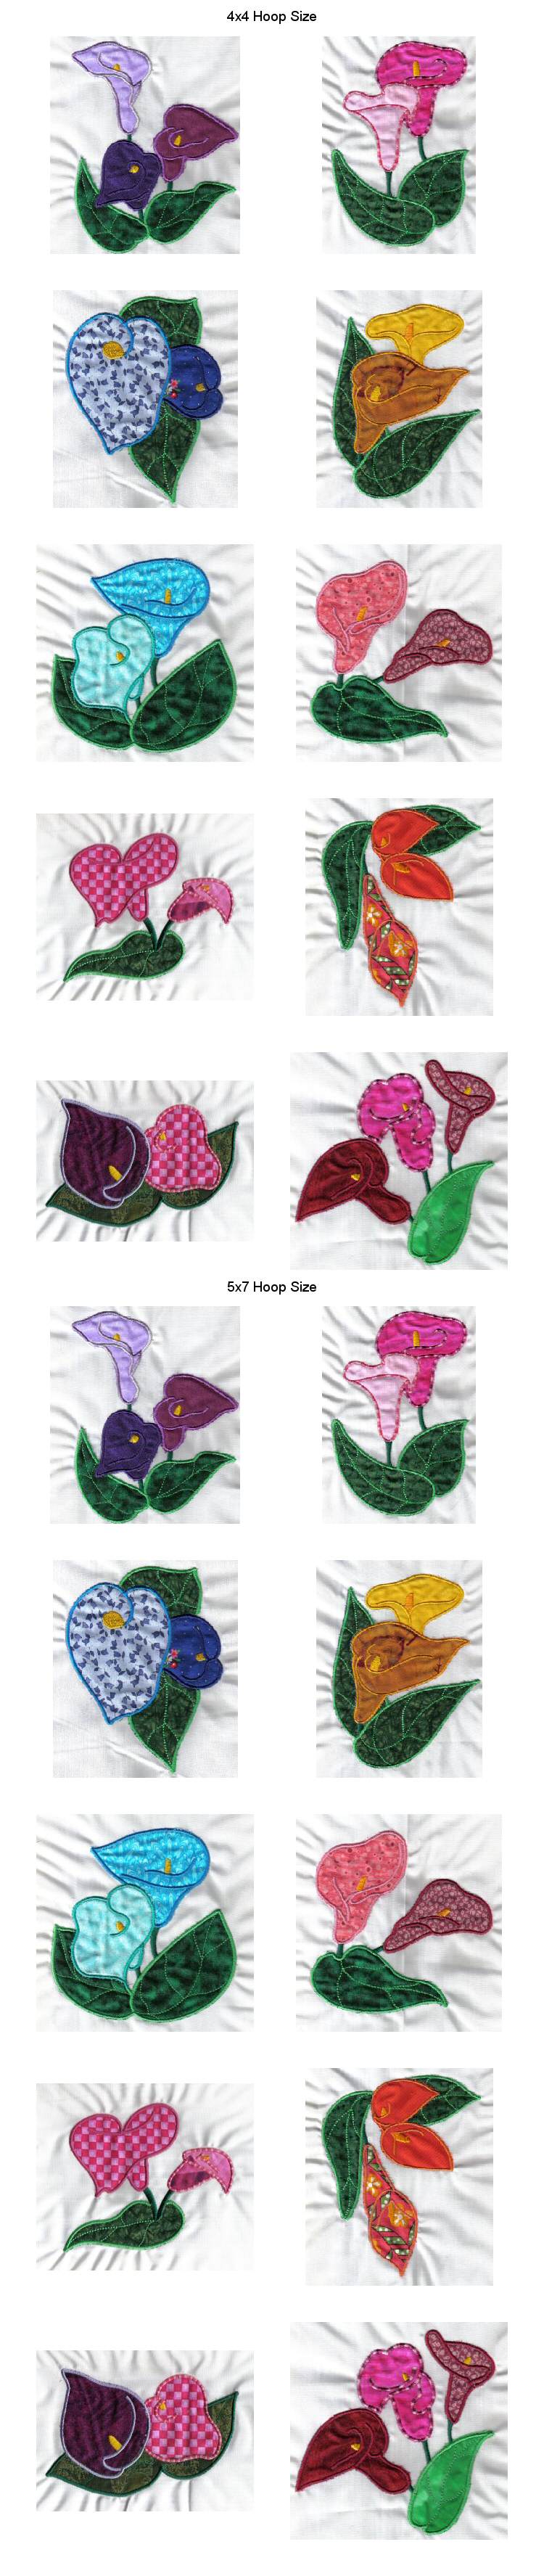 Applique Calla Lilies Embroidery Machine Design Details